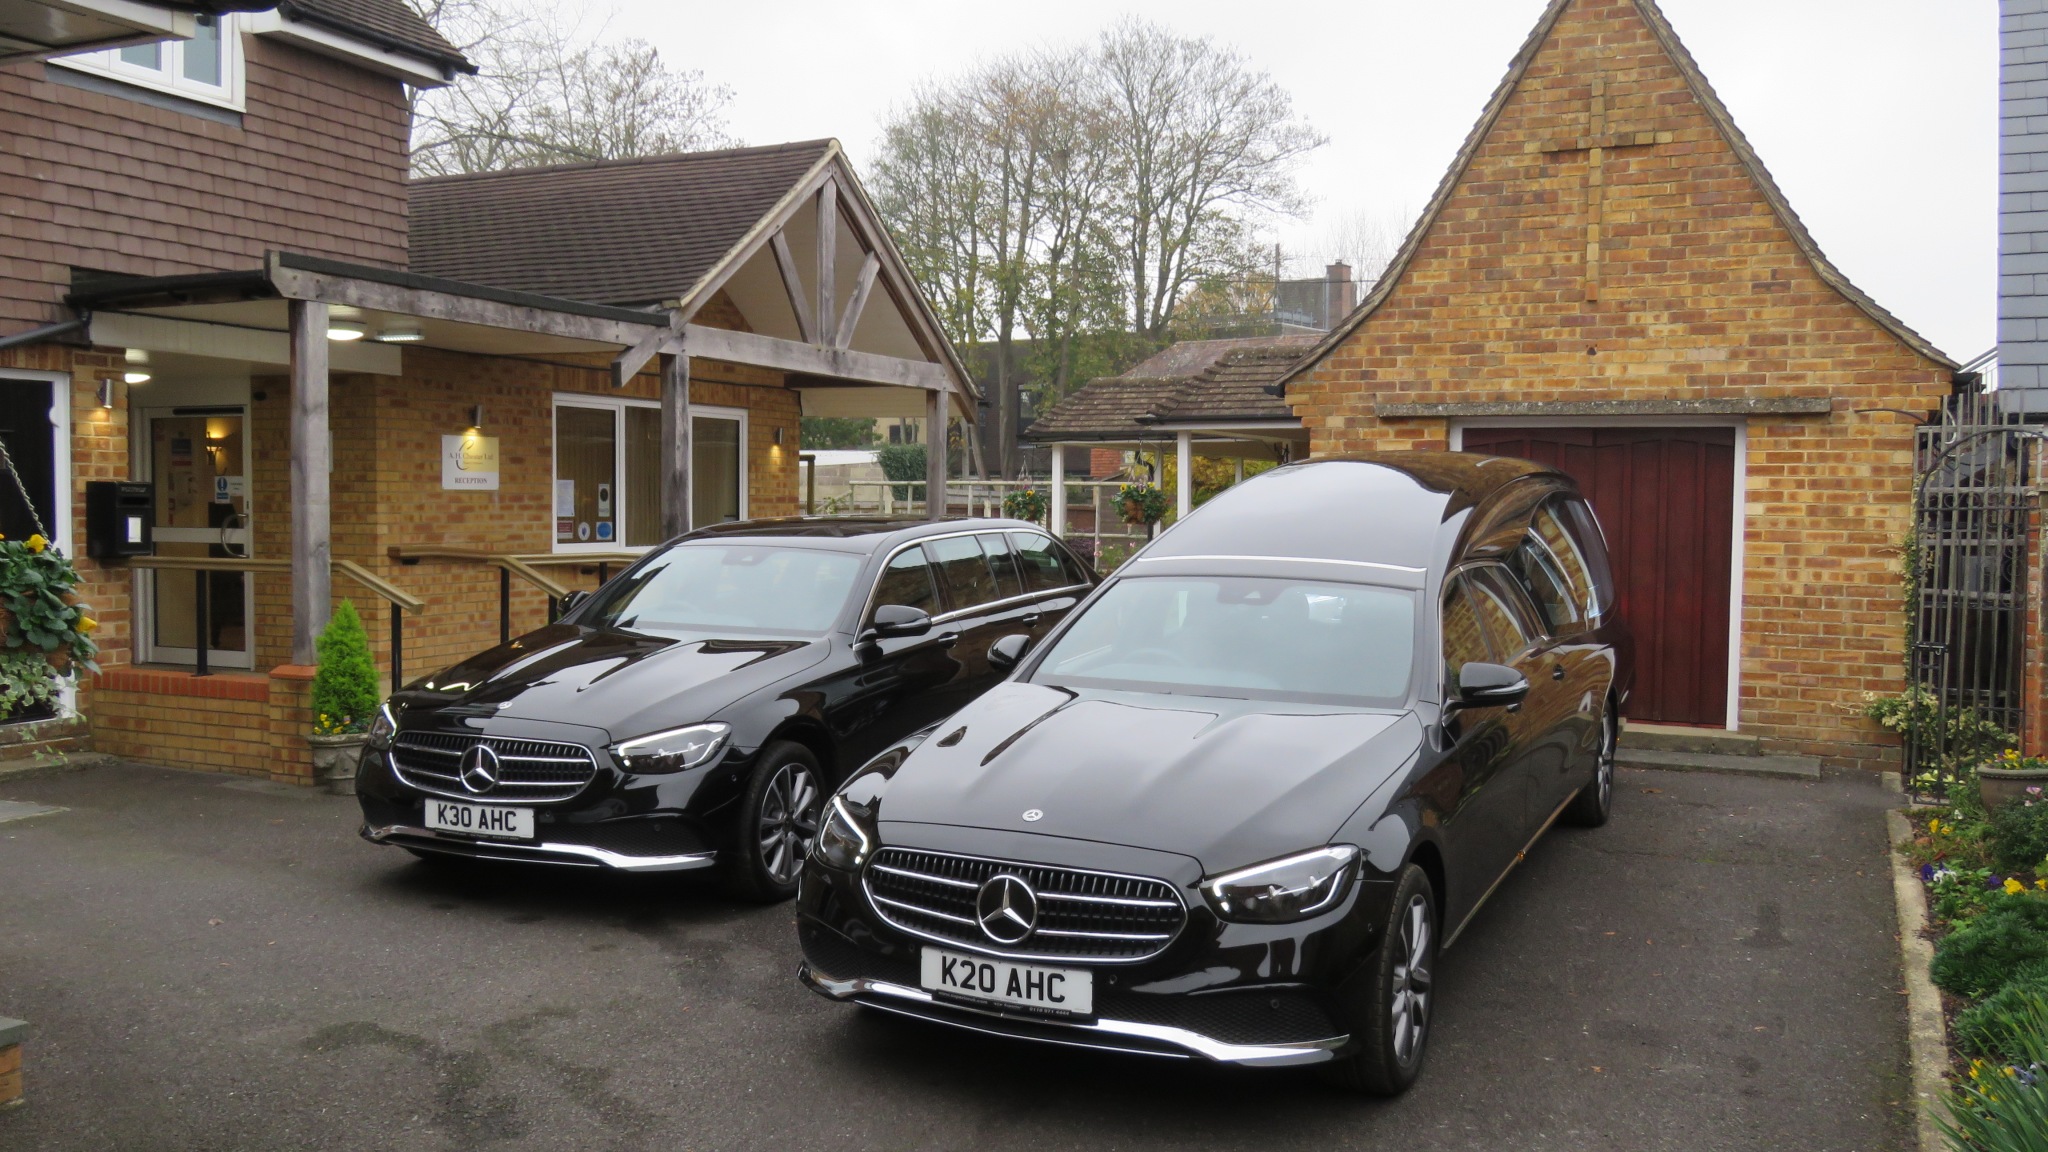 New Pilato Mercedes Fleet For A H Cheater Funeral Directors